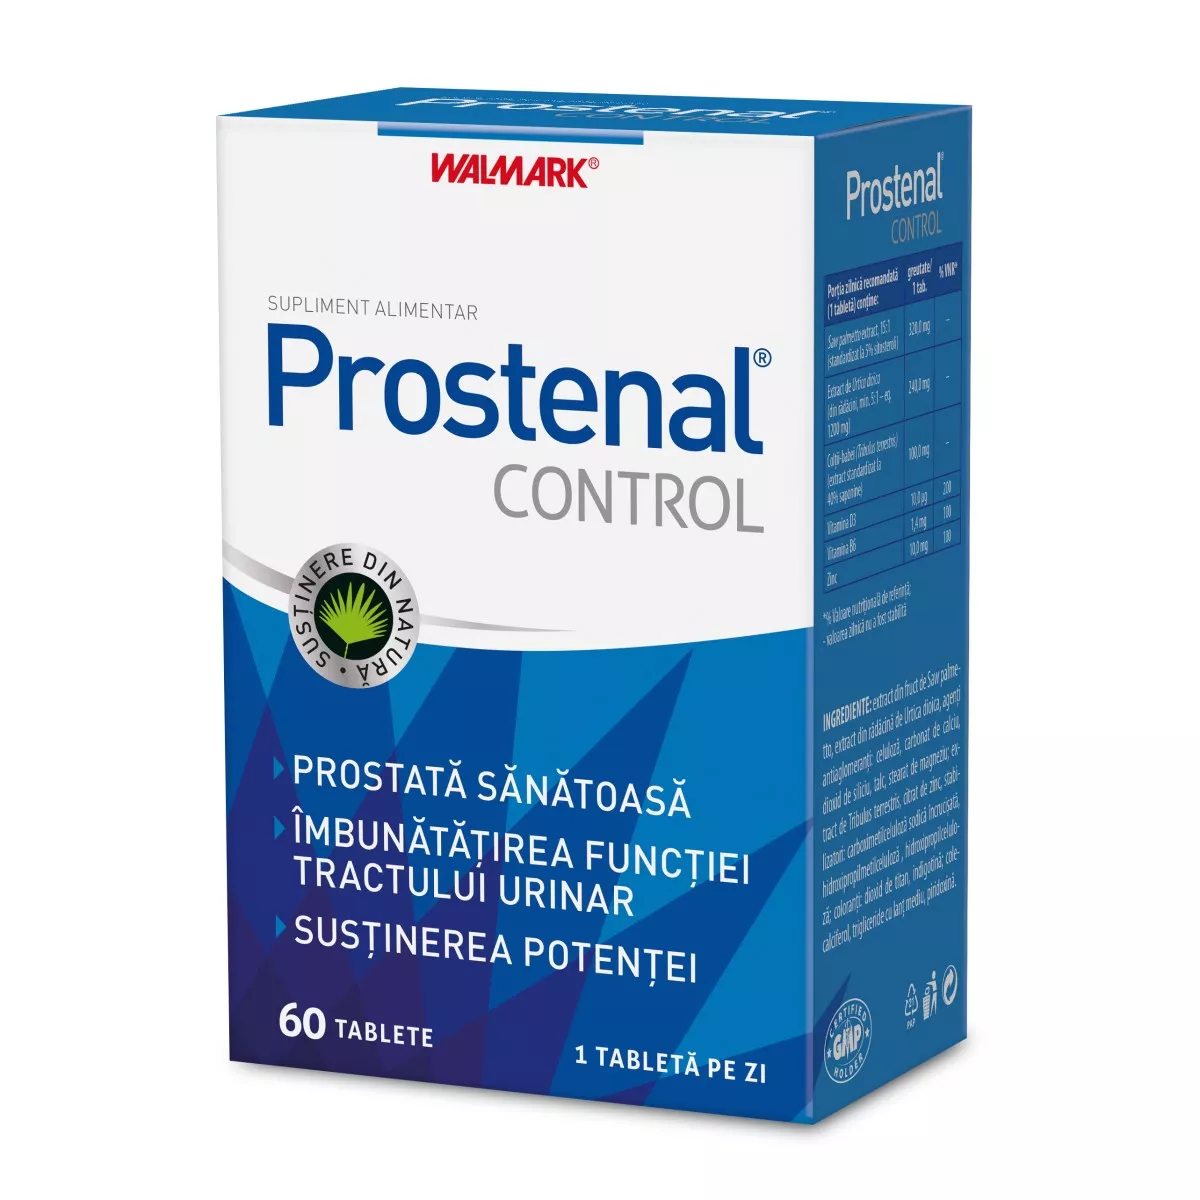 Prostenal Control, 60 tablete, Walmark, [],nordpharm.ro